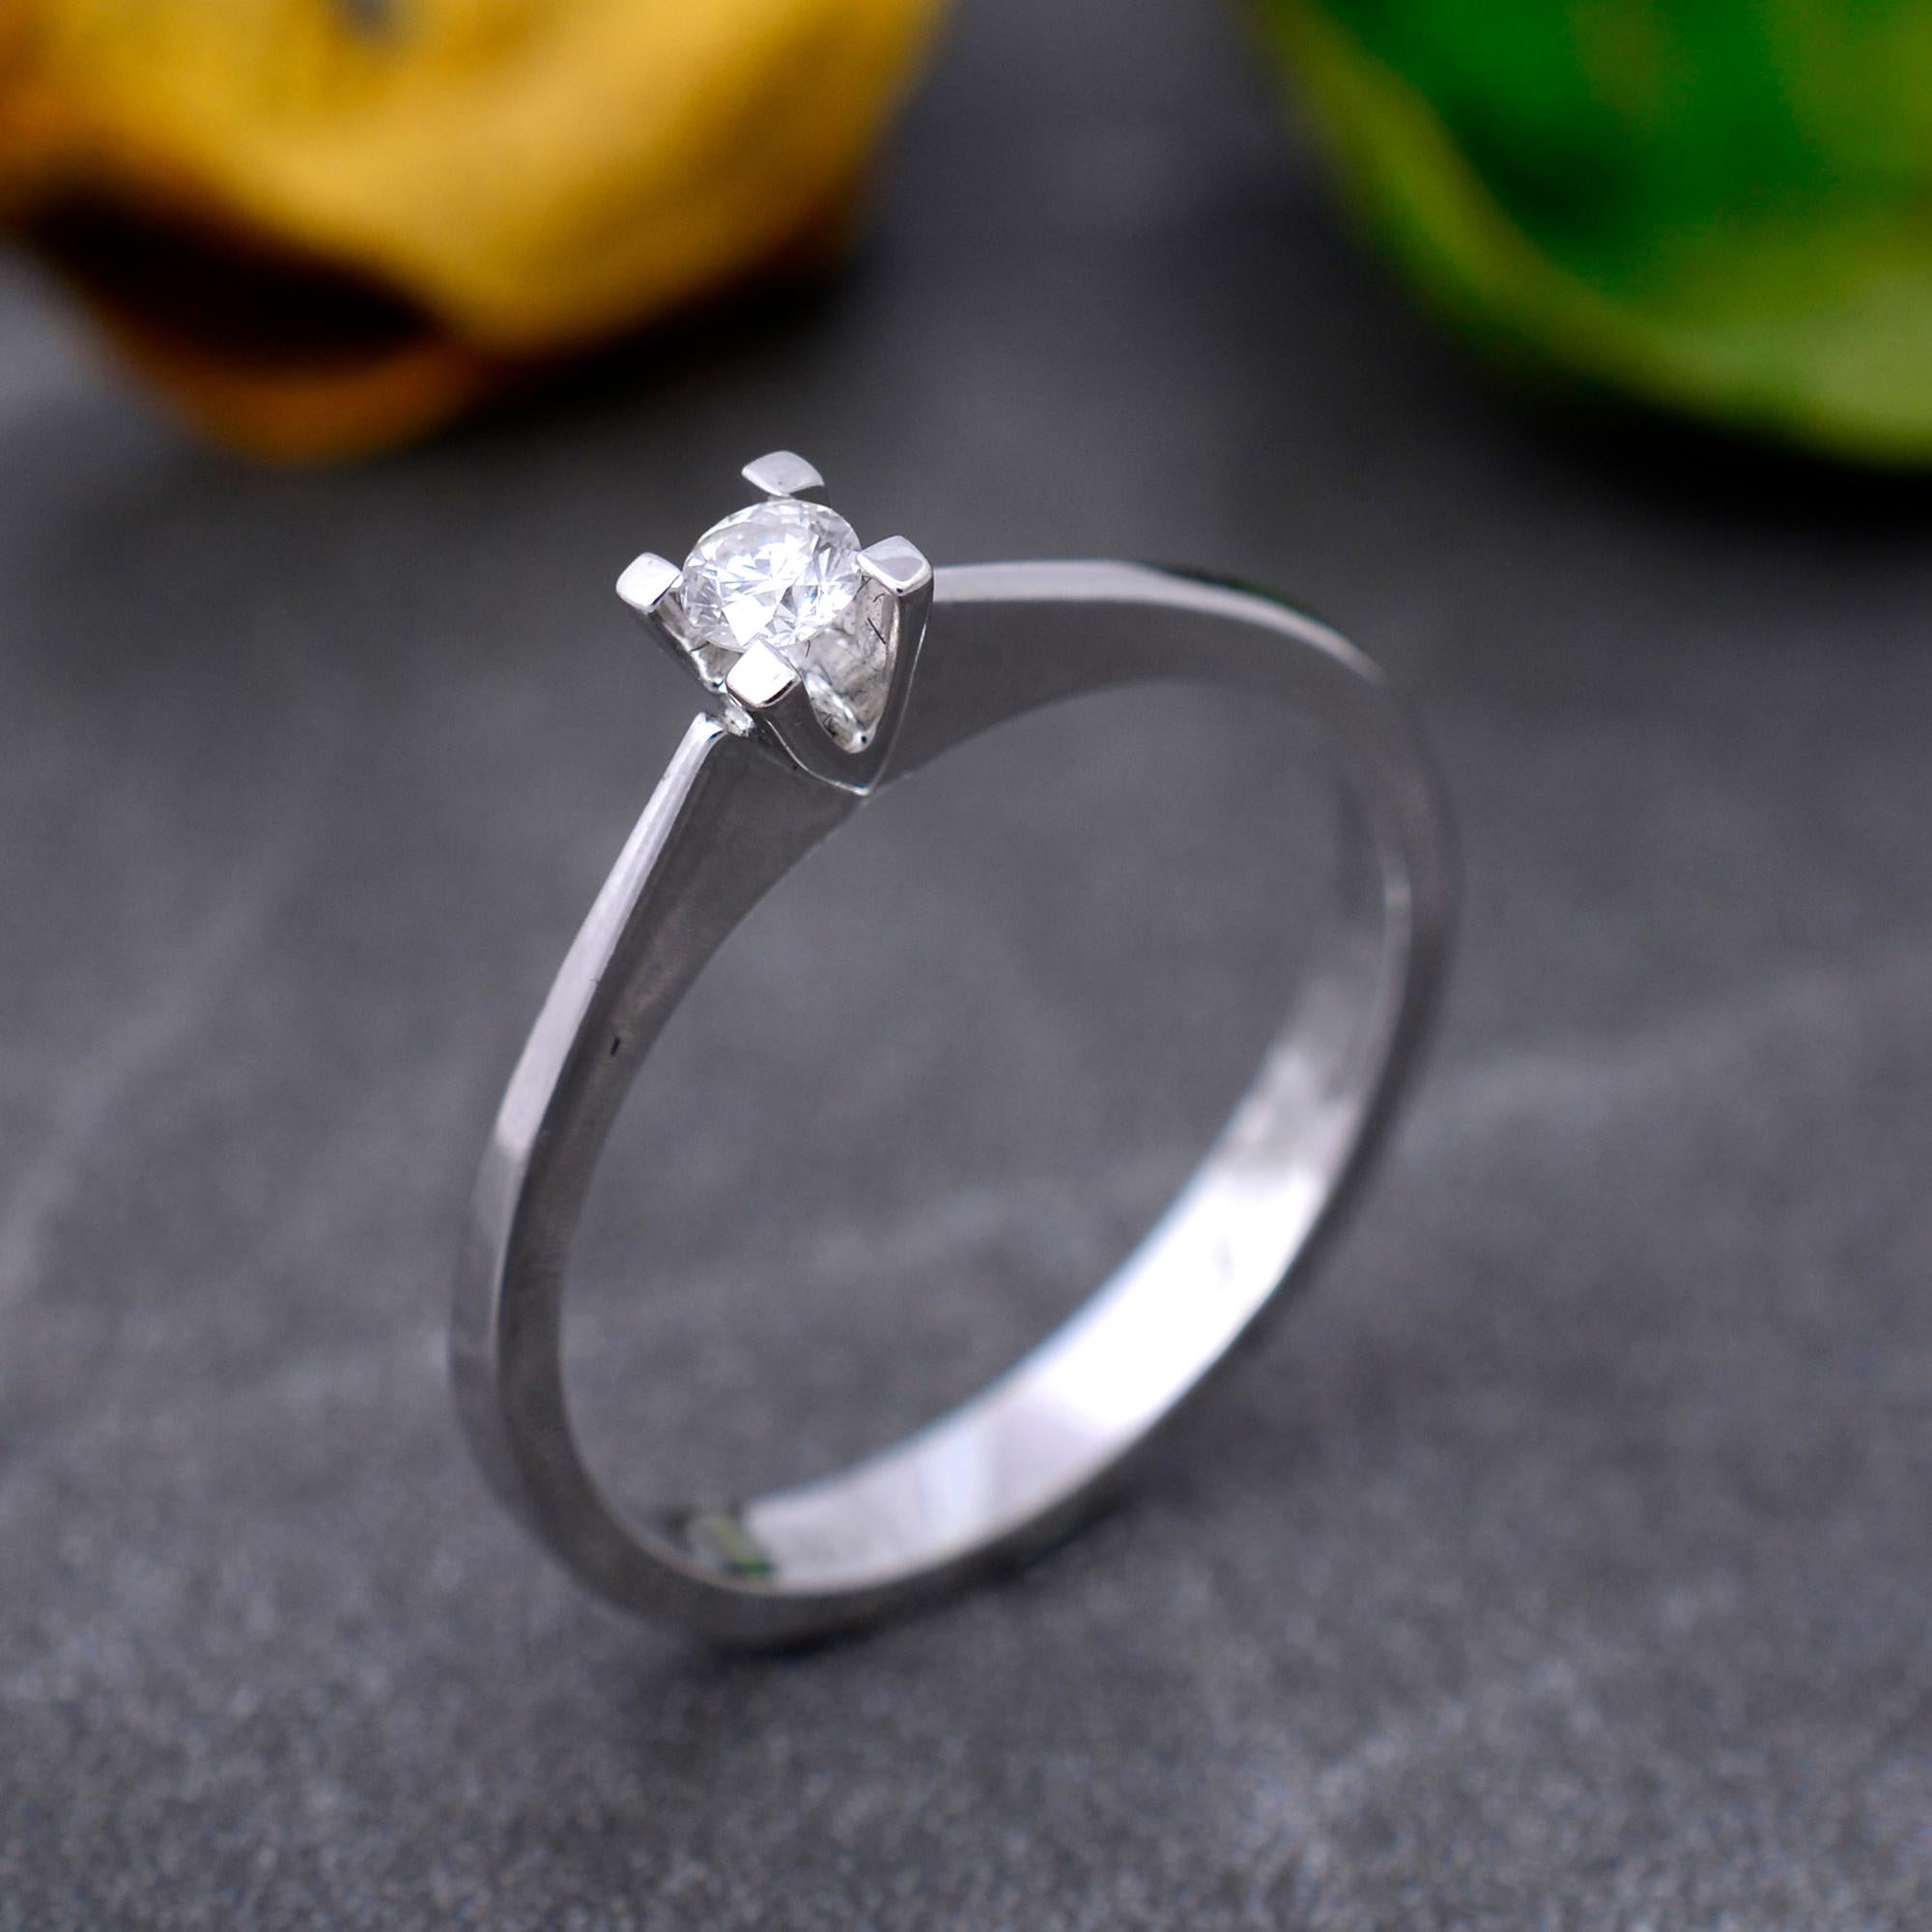 0.1 carat diamond ring price in pakistan